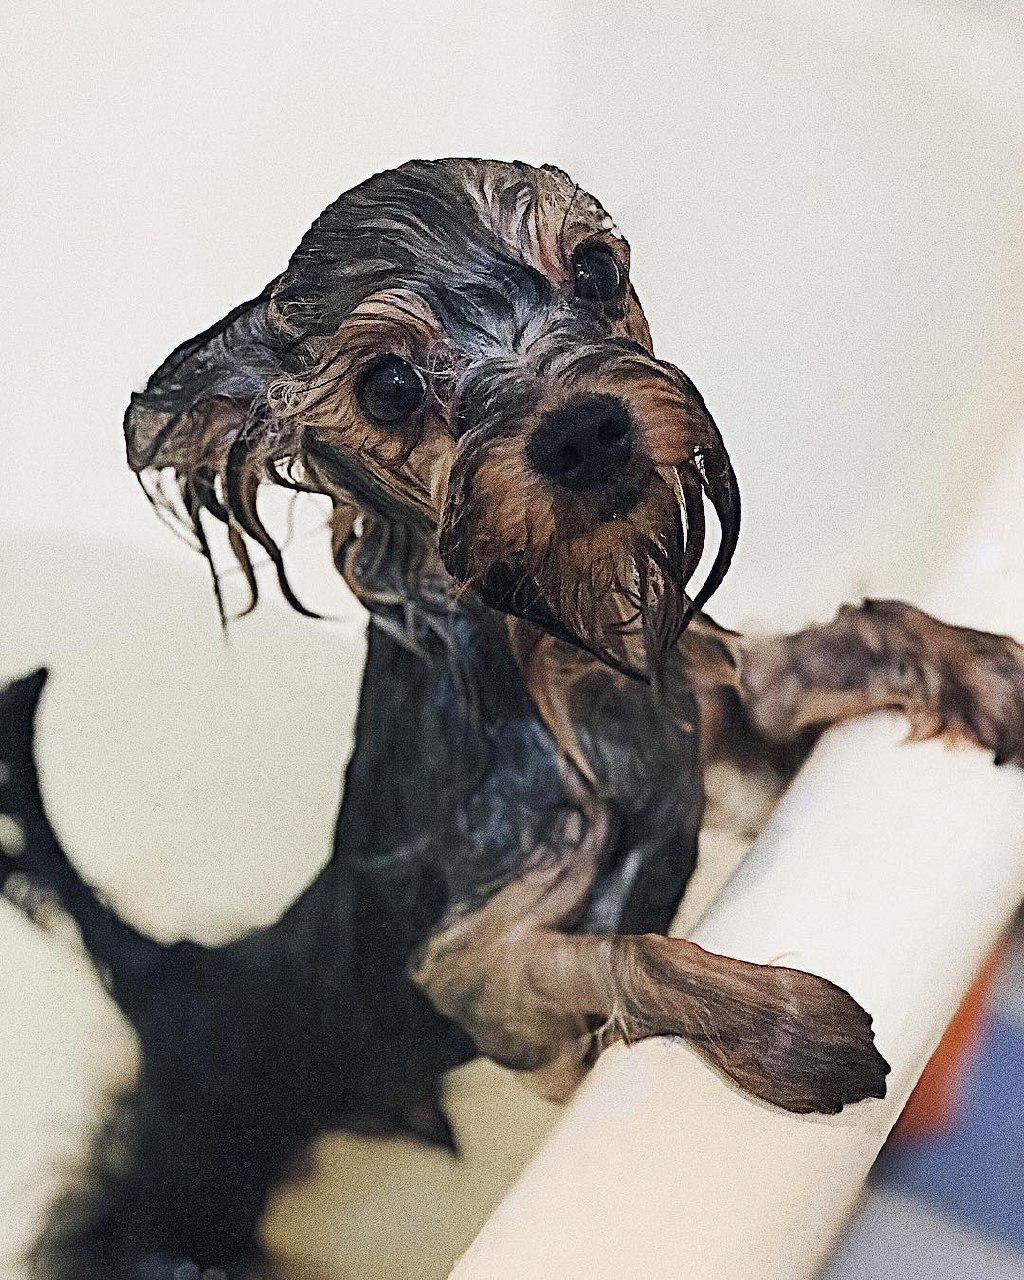 A wet Yorkshire Terrier inside the bathtub